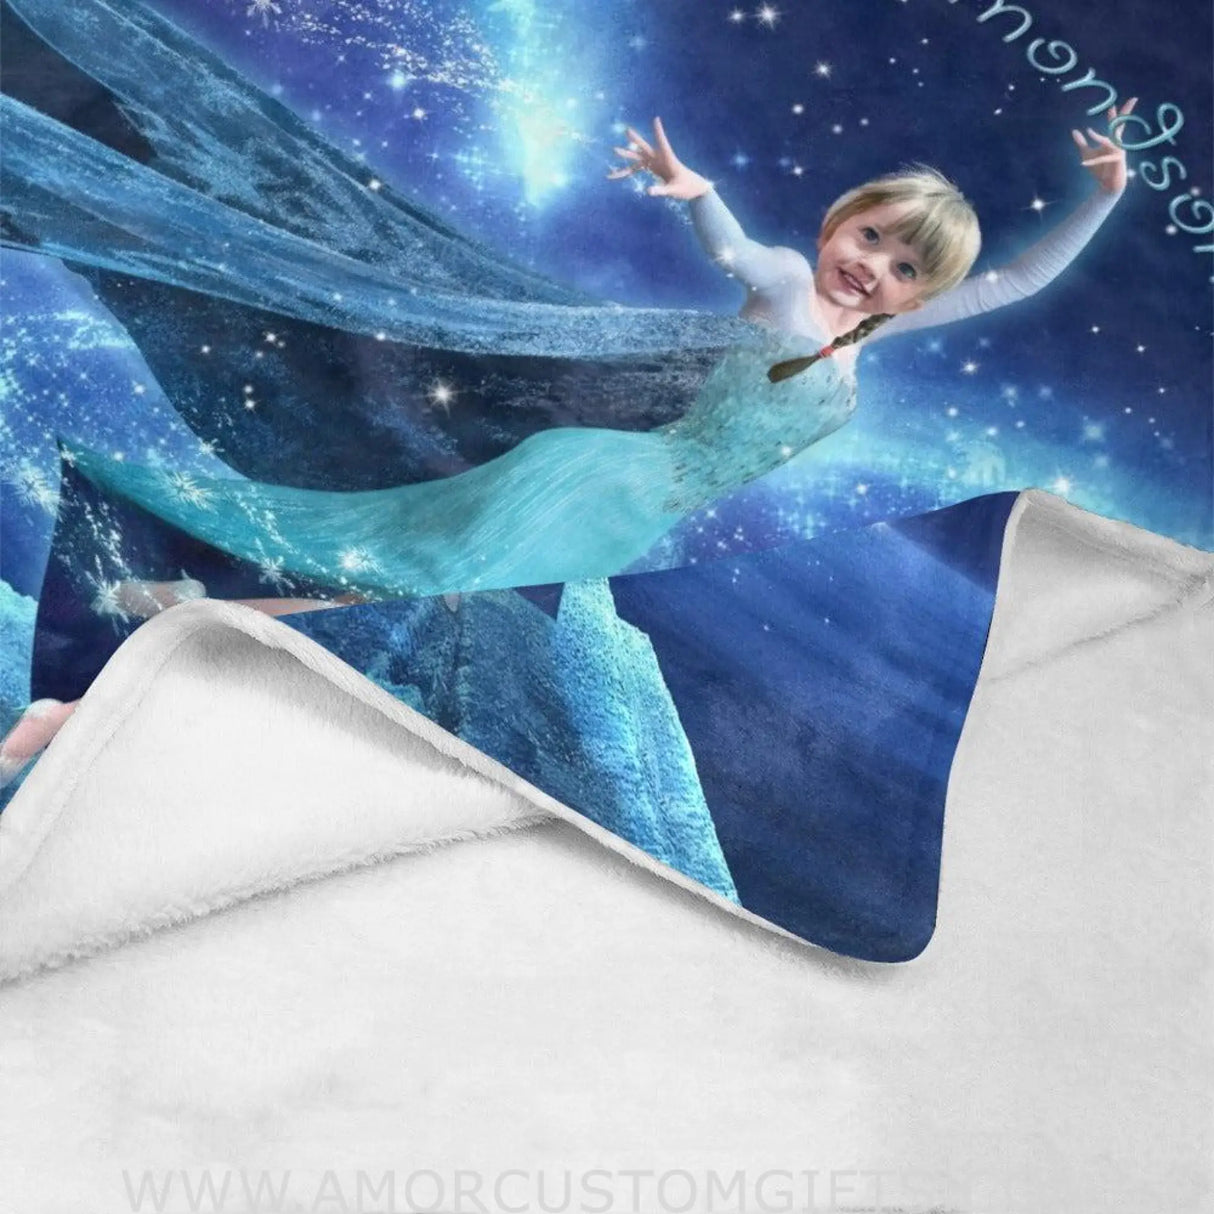 Blankets Personalized Fairy Tale Frozen Elsa Princess Blanket | Custom Name & Face Girl Frozen Princess Blanket